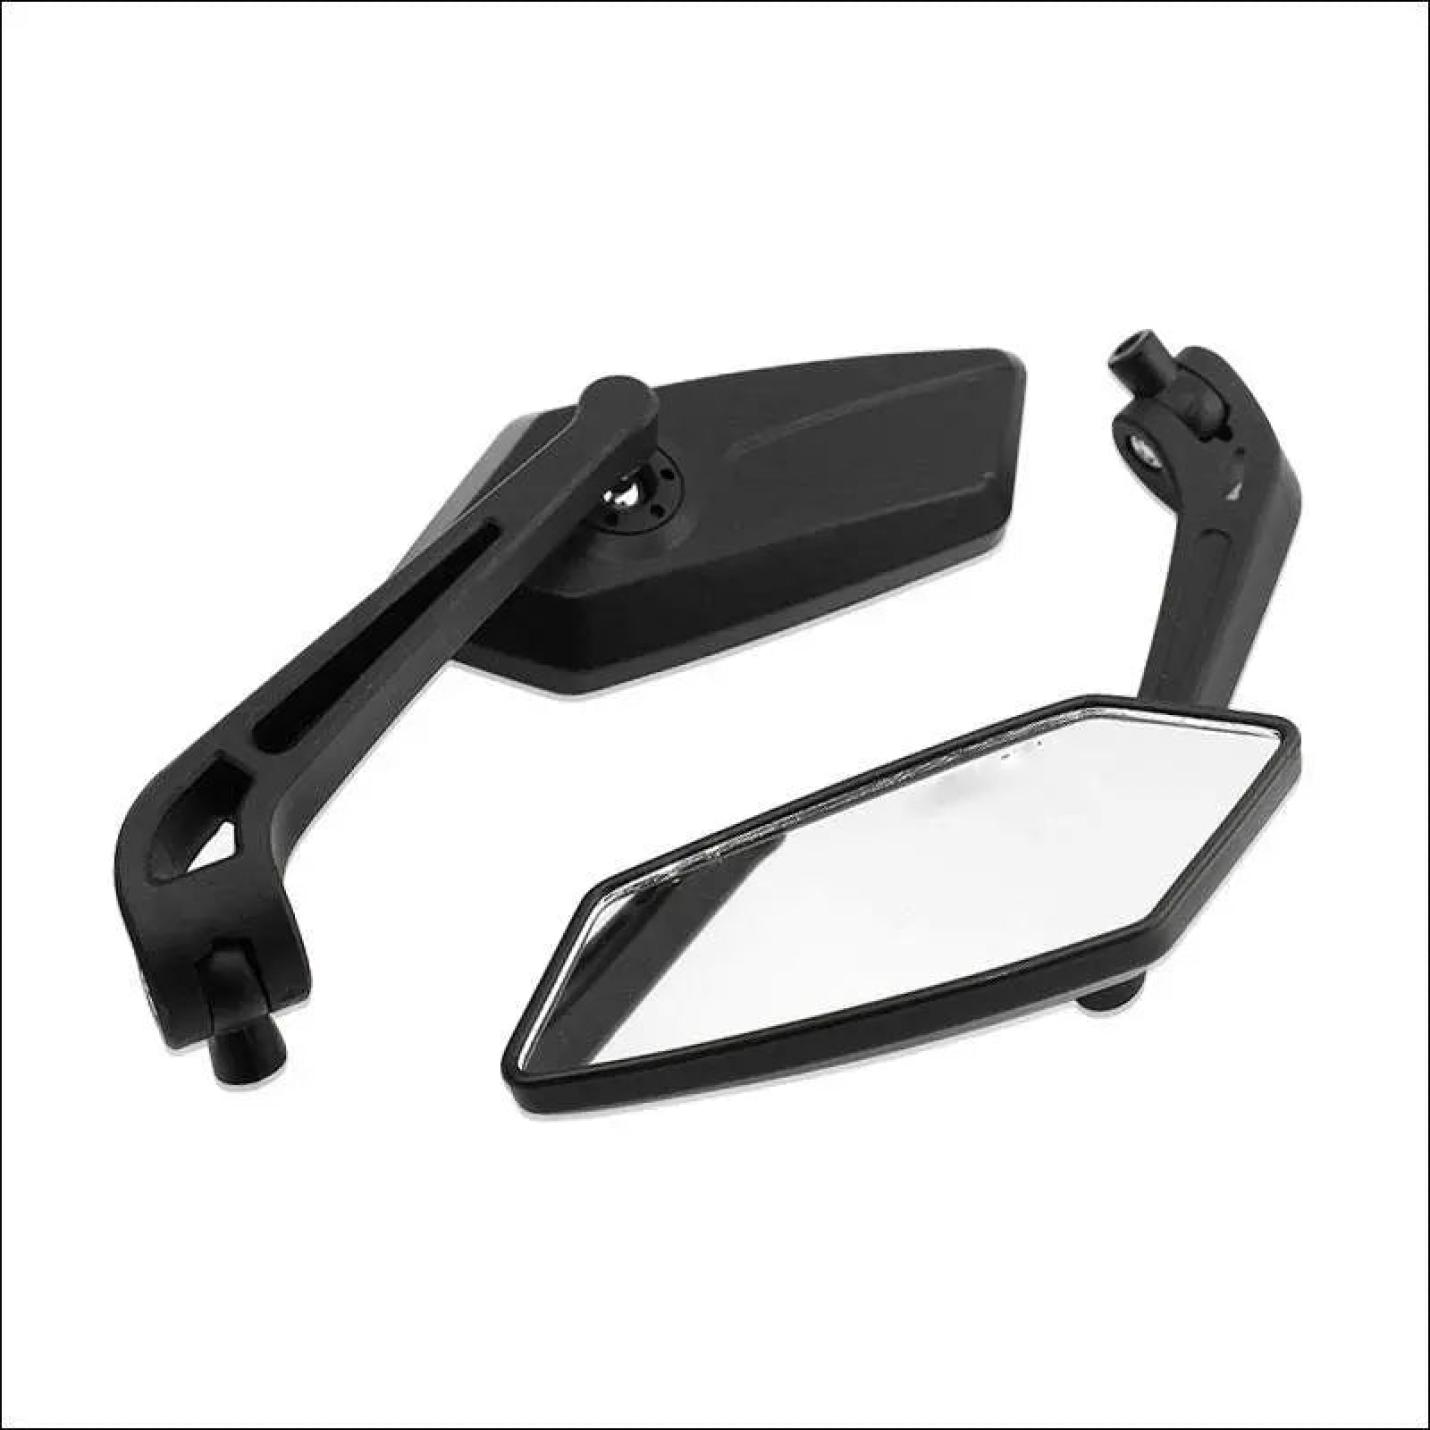 Koso spiegels - Scooter spiegels - Motor spiegels - Universeel - Vespa - Zip - Sprint